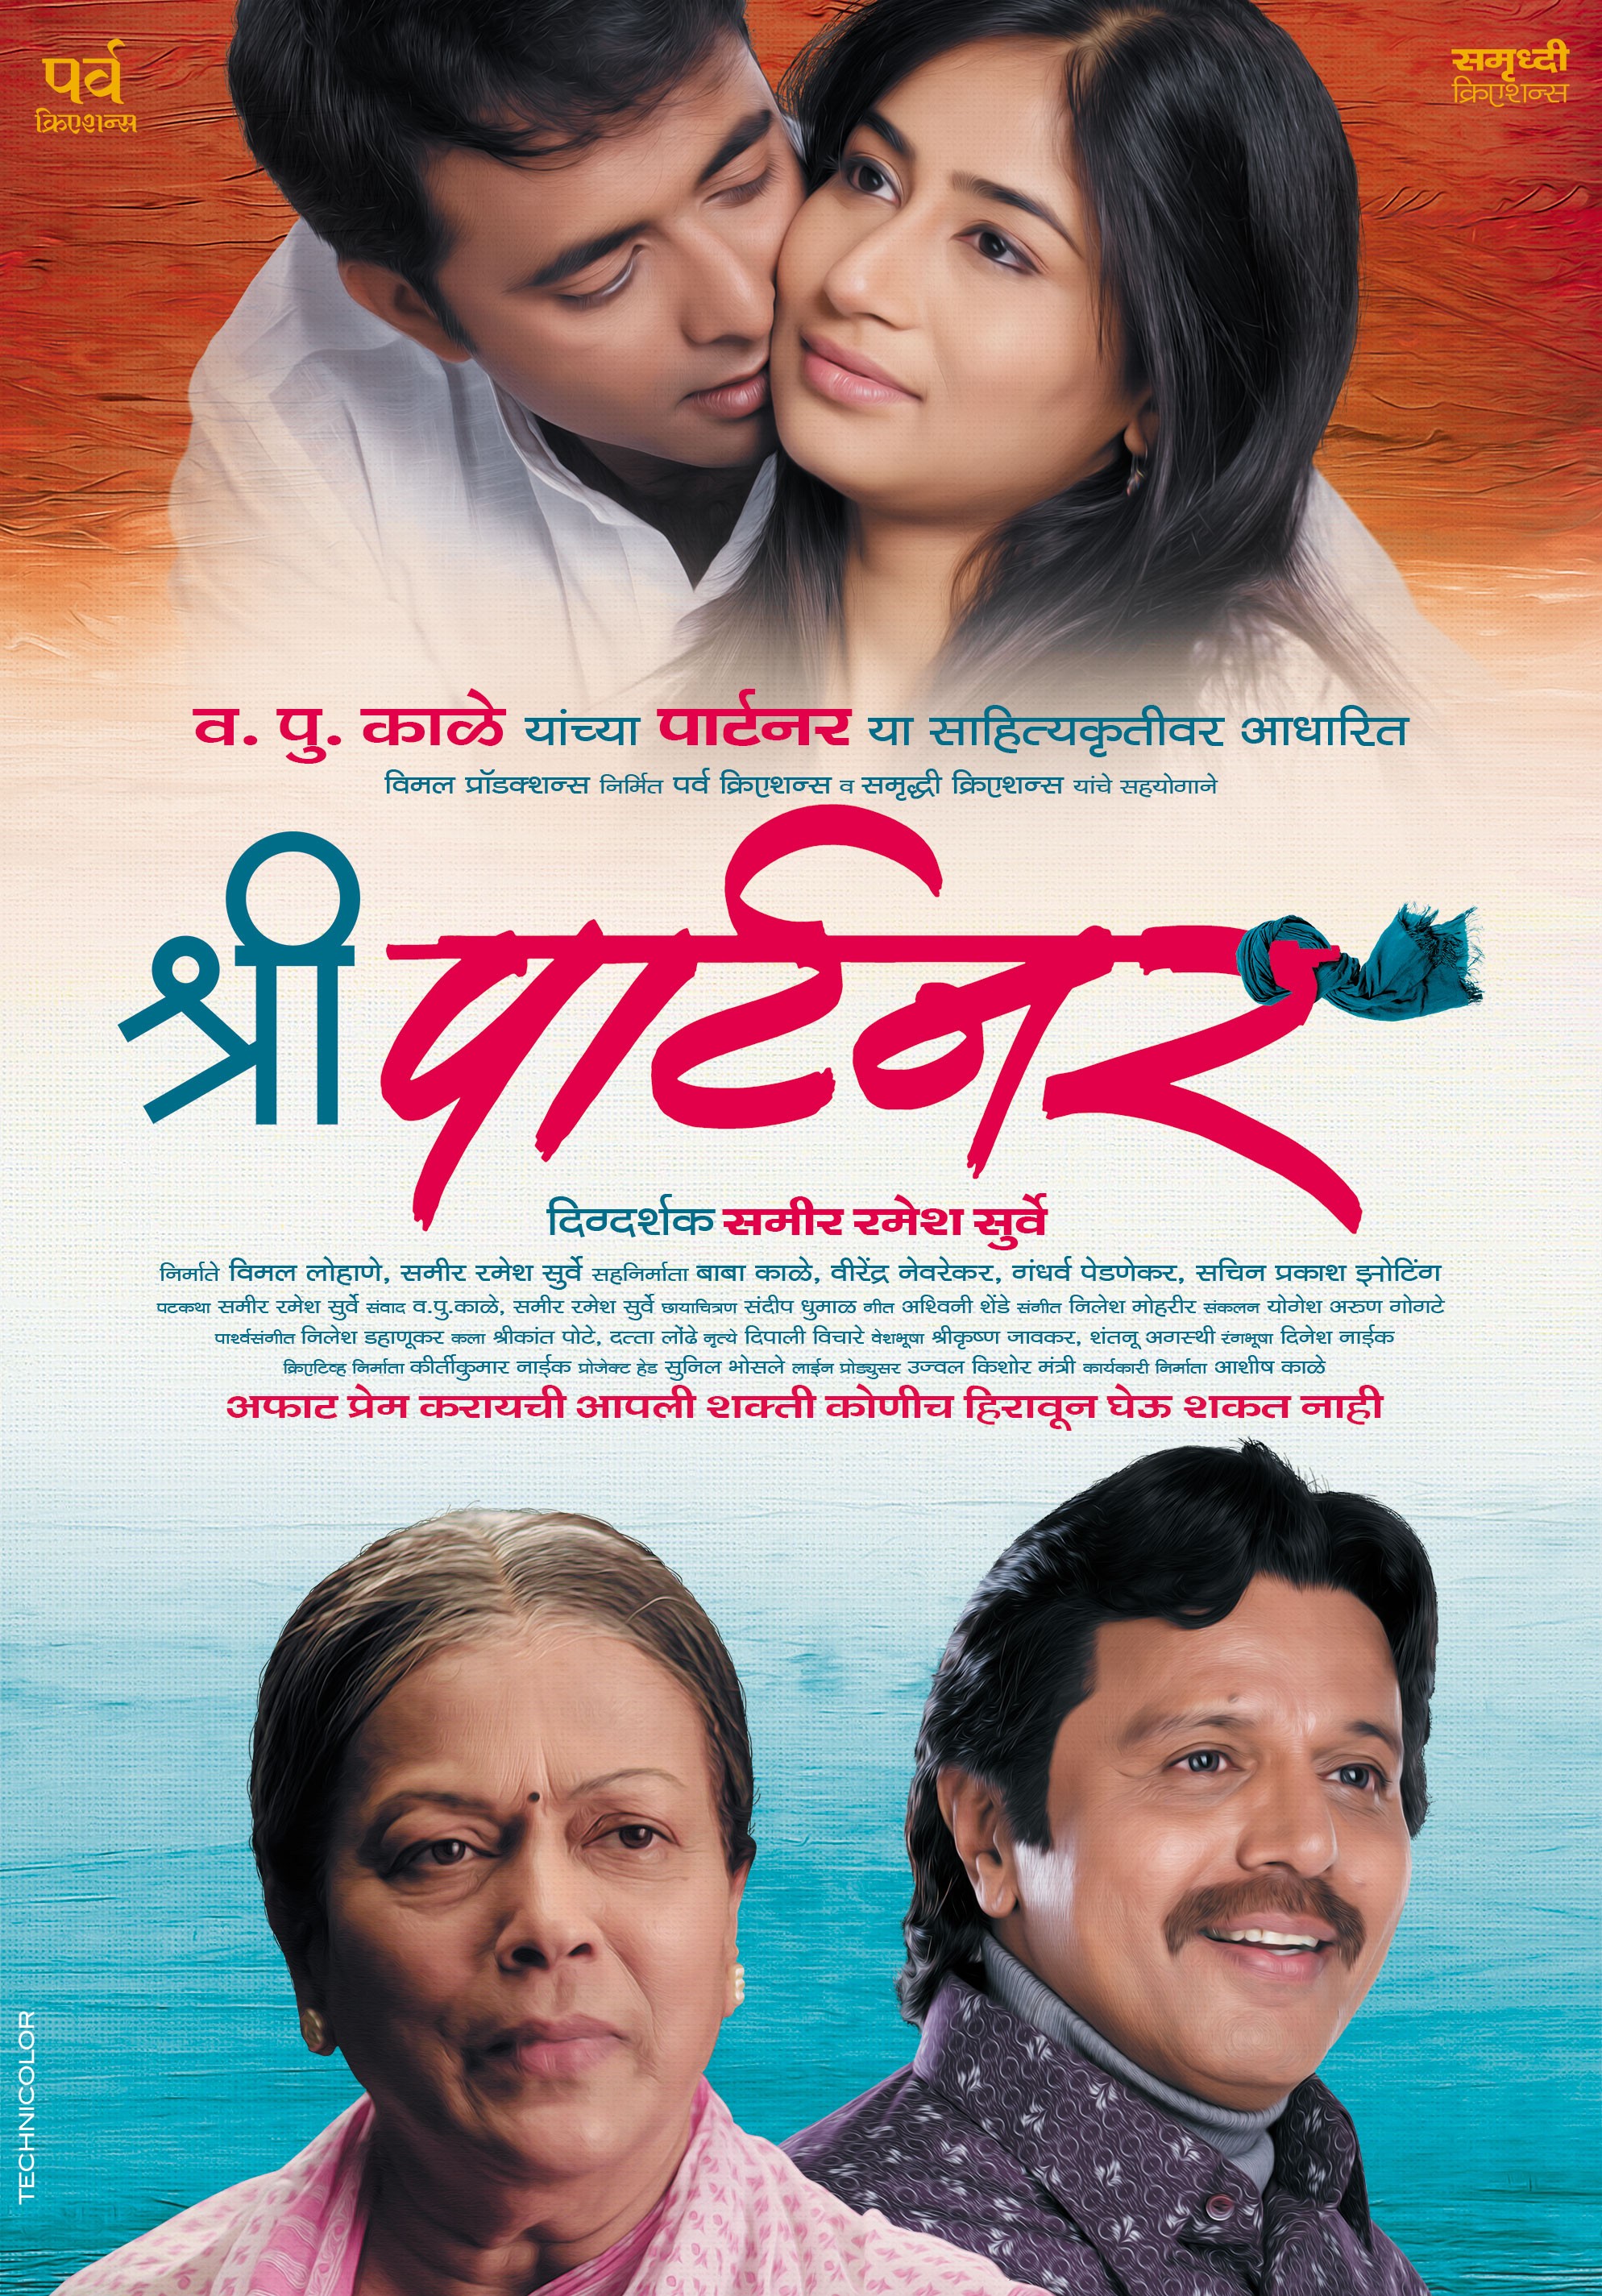 Mega Sized Movie Poster Image for Shree Partner (#10 of 11)